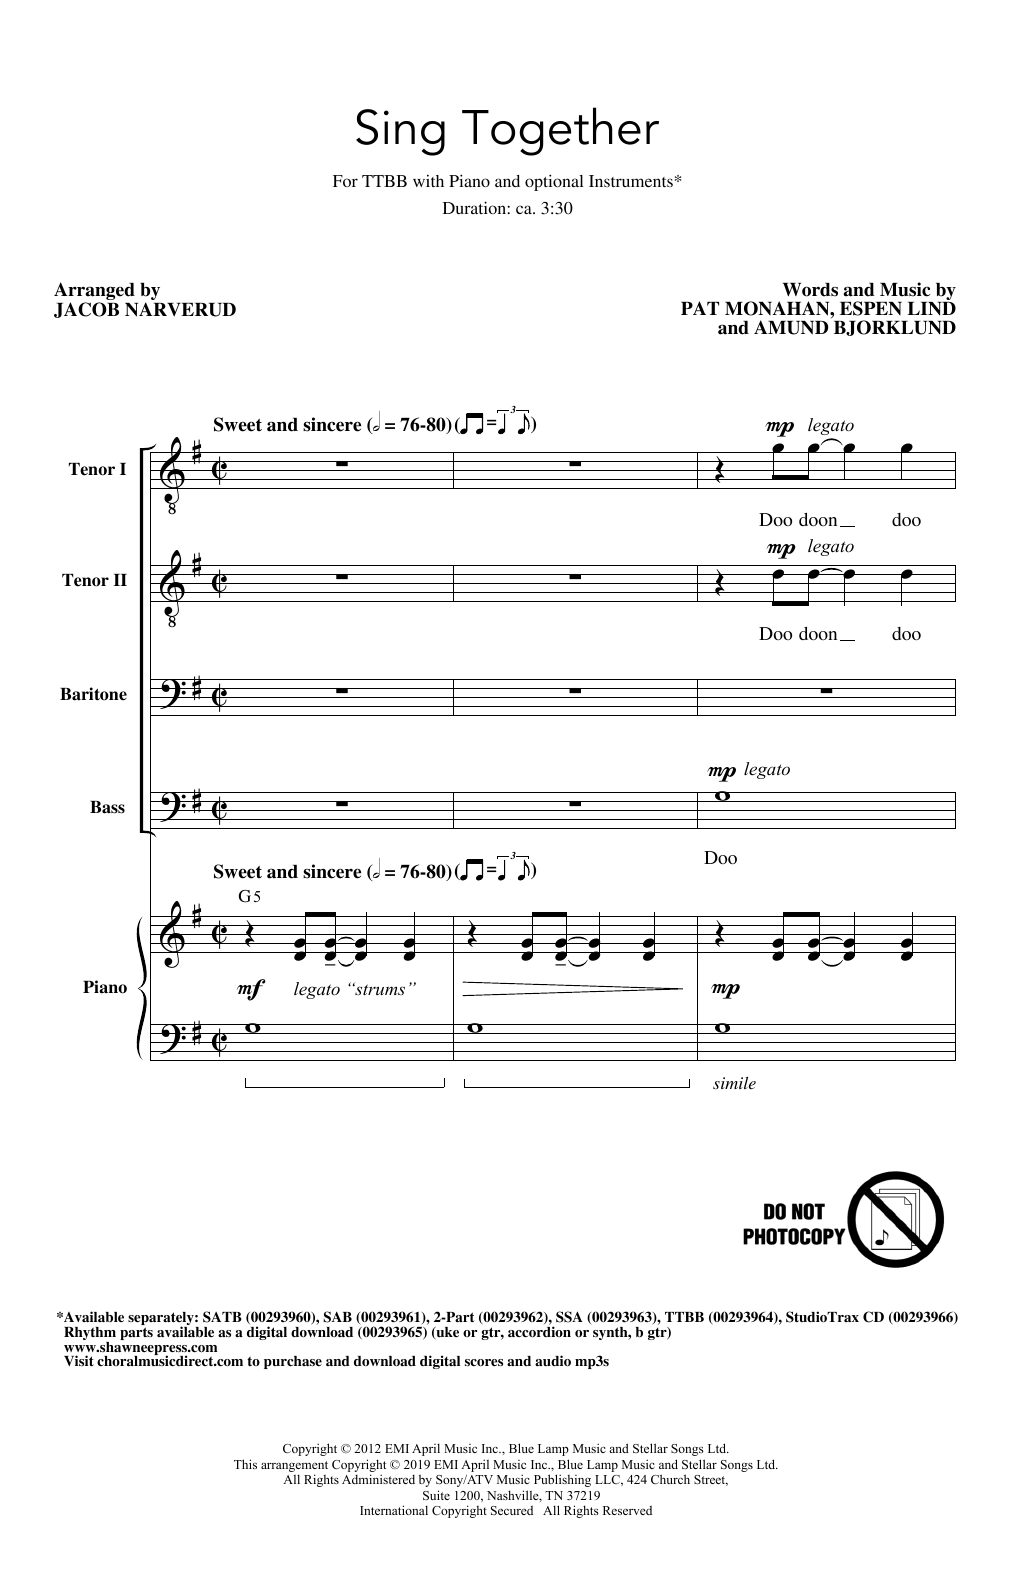 Train Sing Together (arr. Jacob Narverud) Sheet Music Notes & Chords for SAB Choir - Download or Print PDF